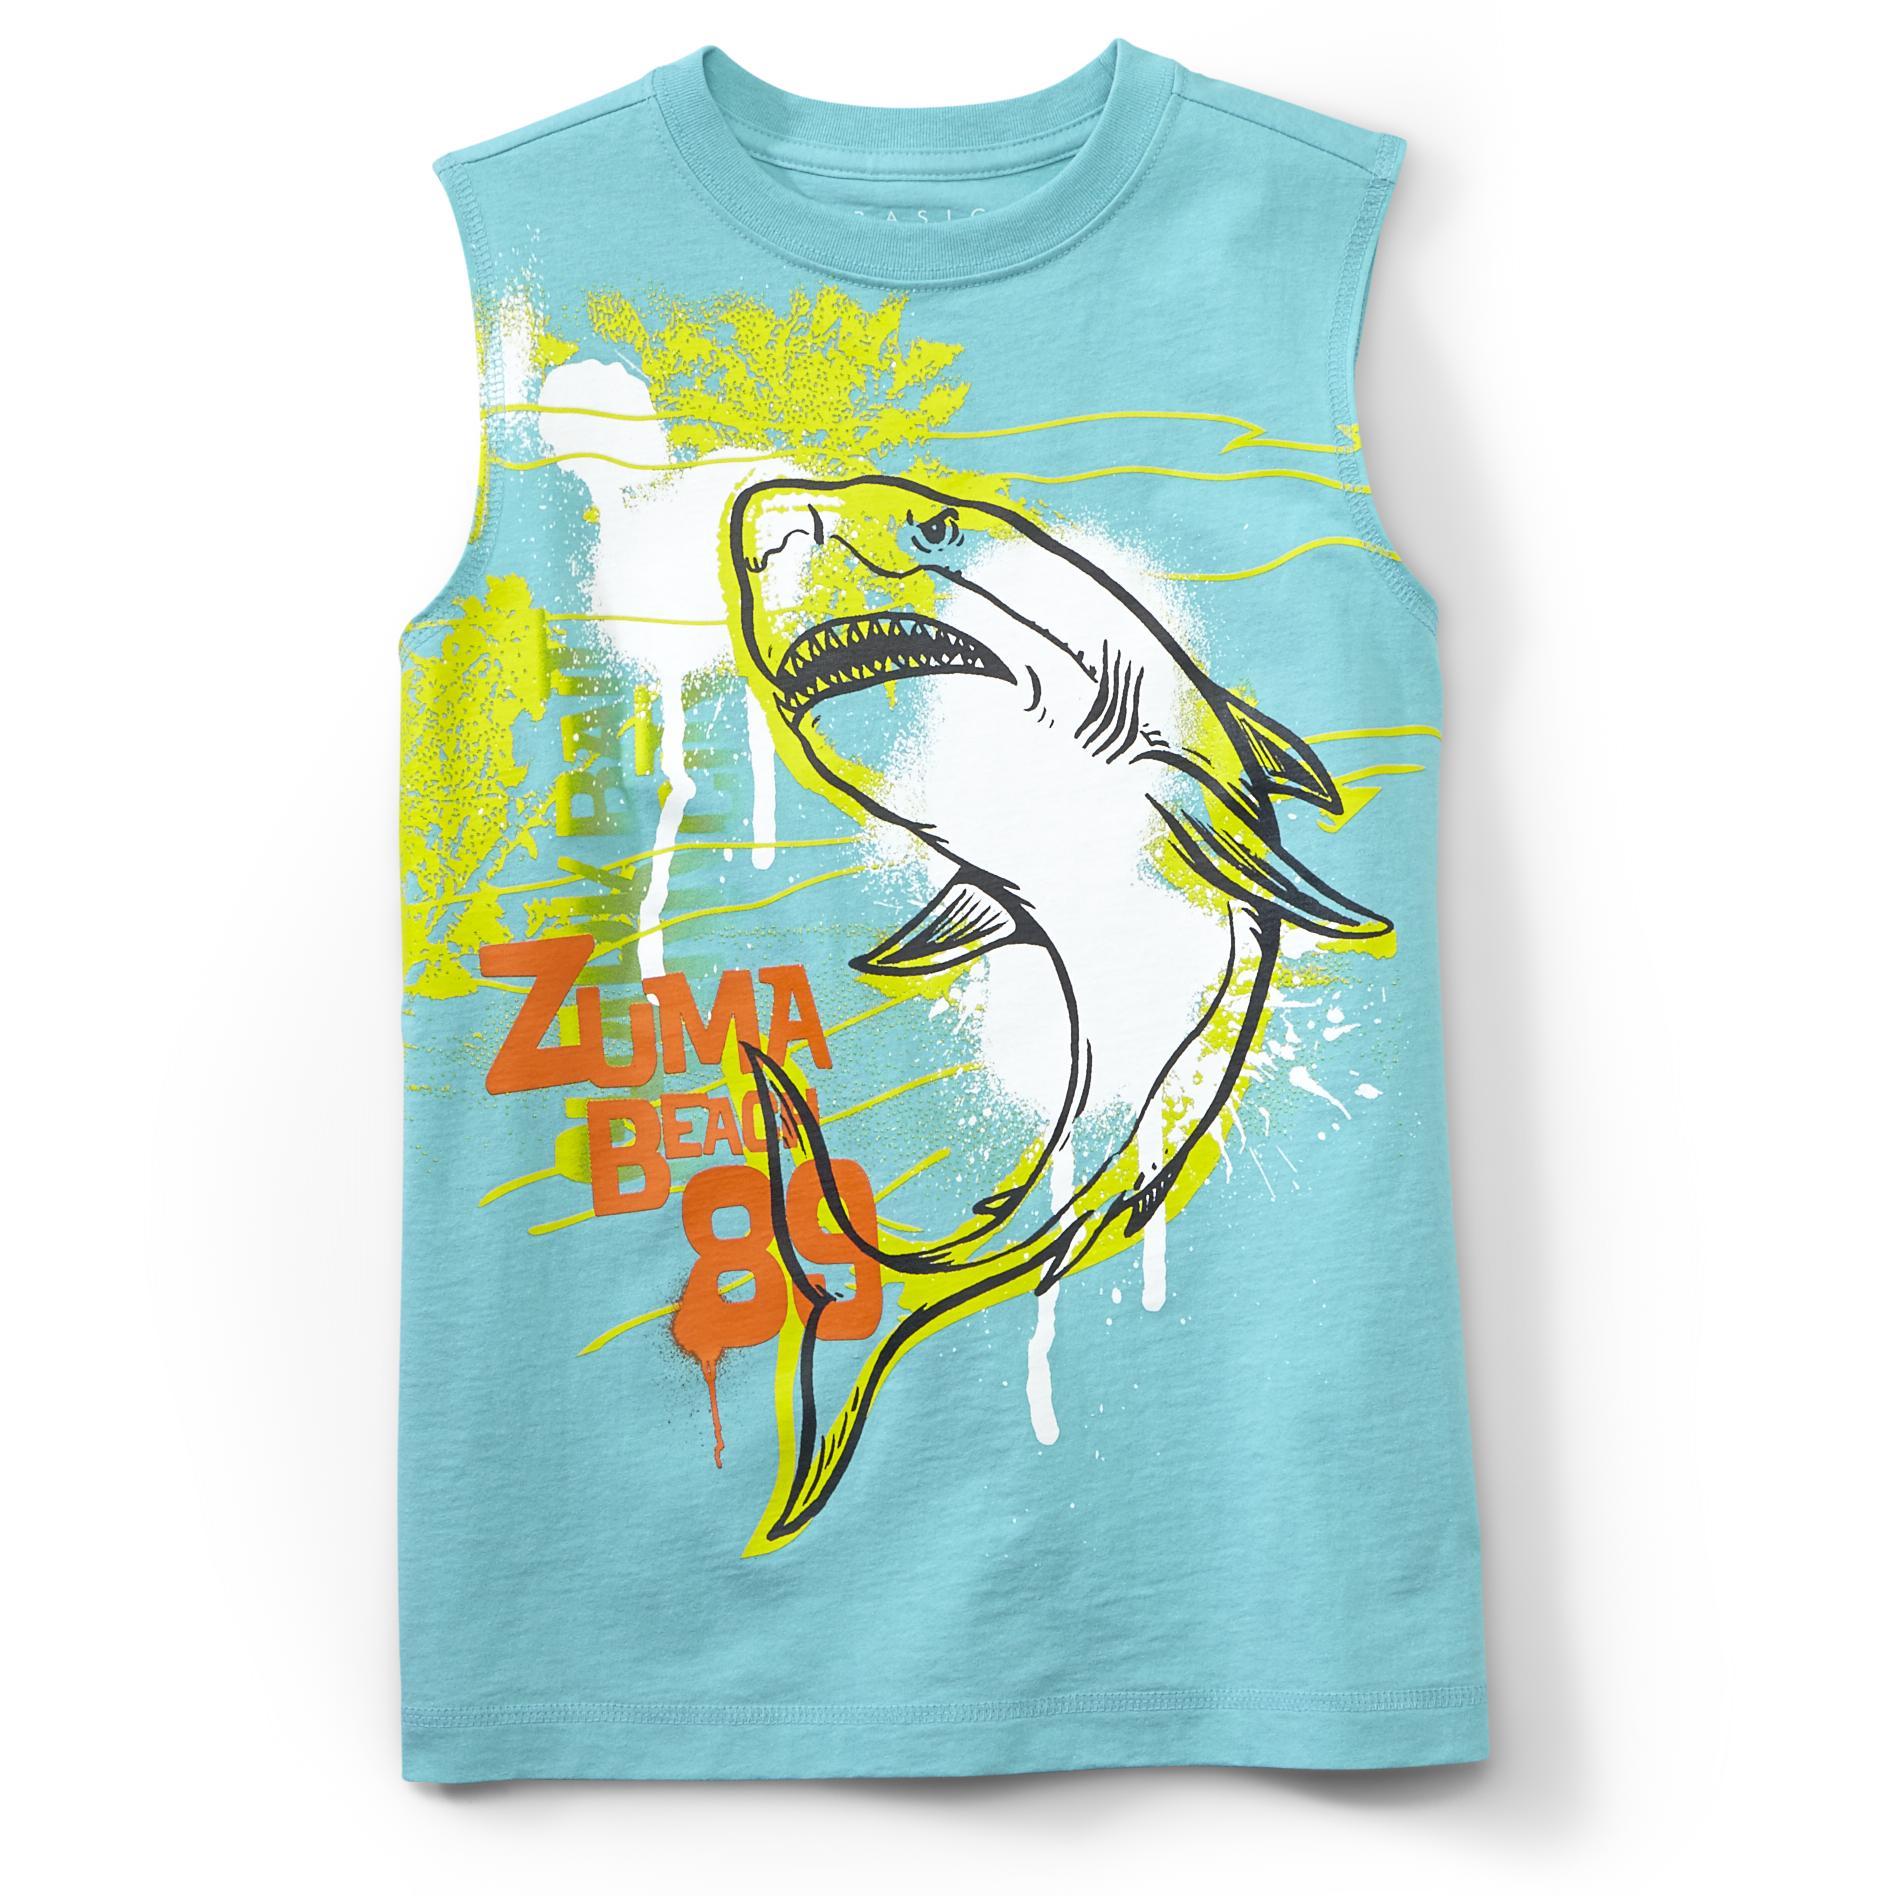 Basic Editions Boy's Sleeveless Graphic T-Shirt - Shark